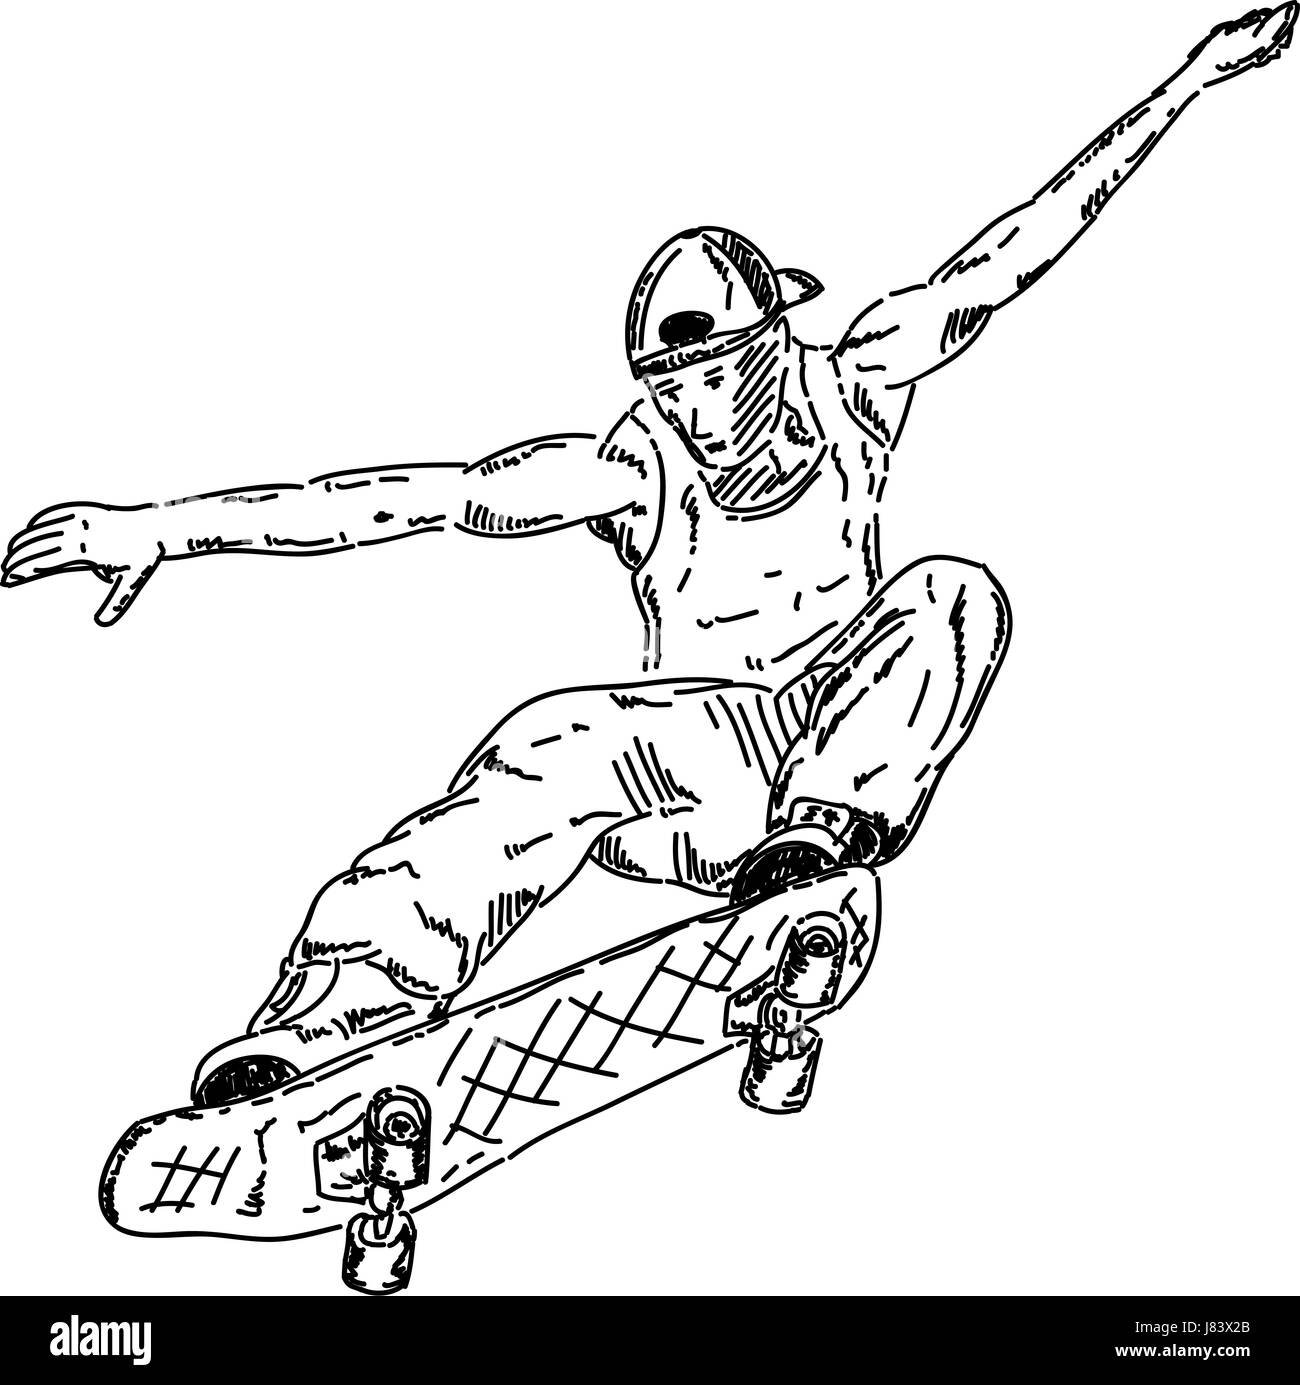 Зарисовка мальчик на скейте